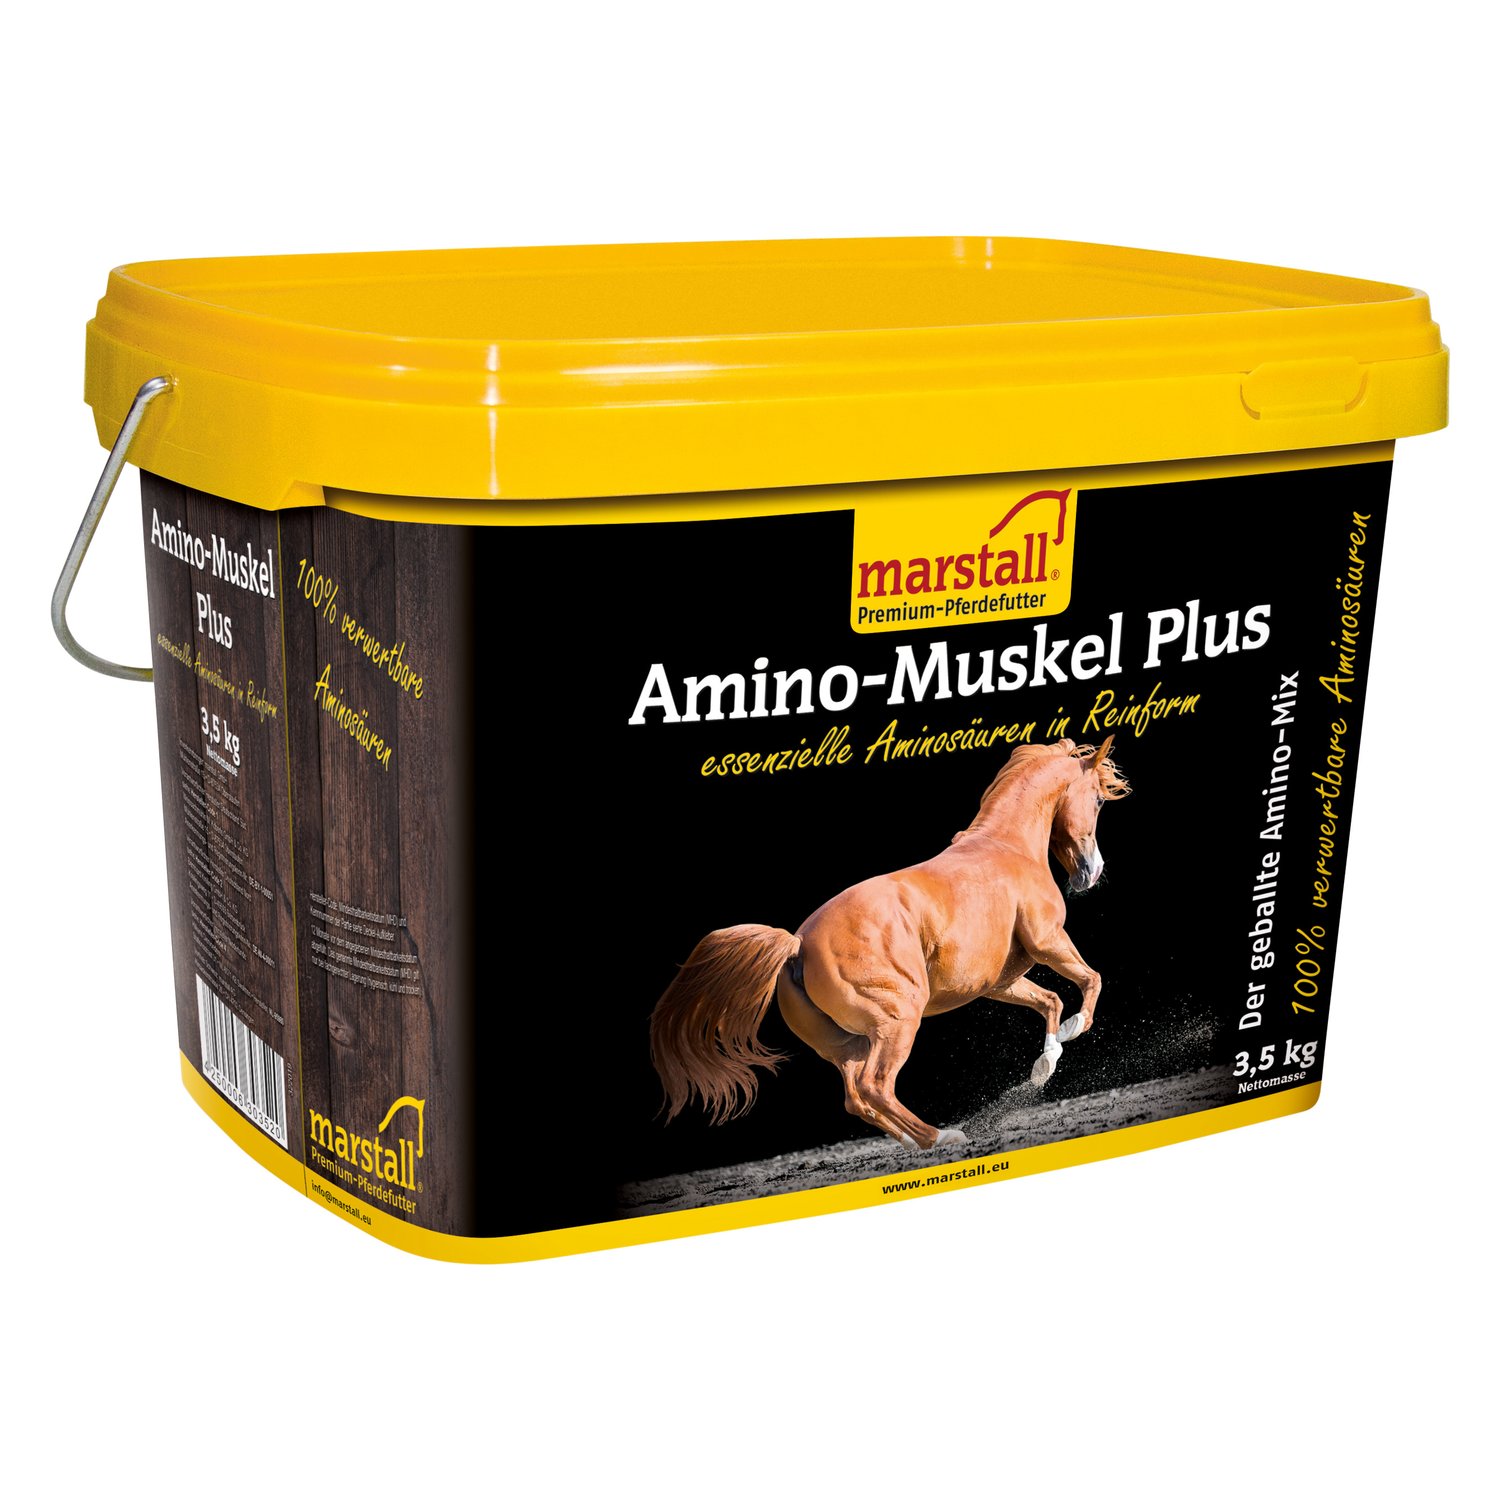 marstall Amino-Muskel Plus 3,5 kg